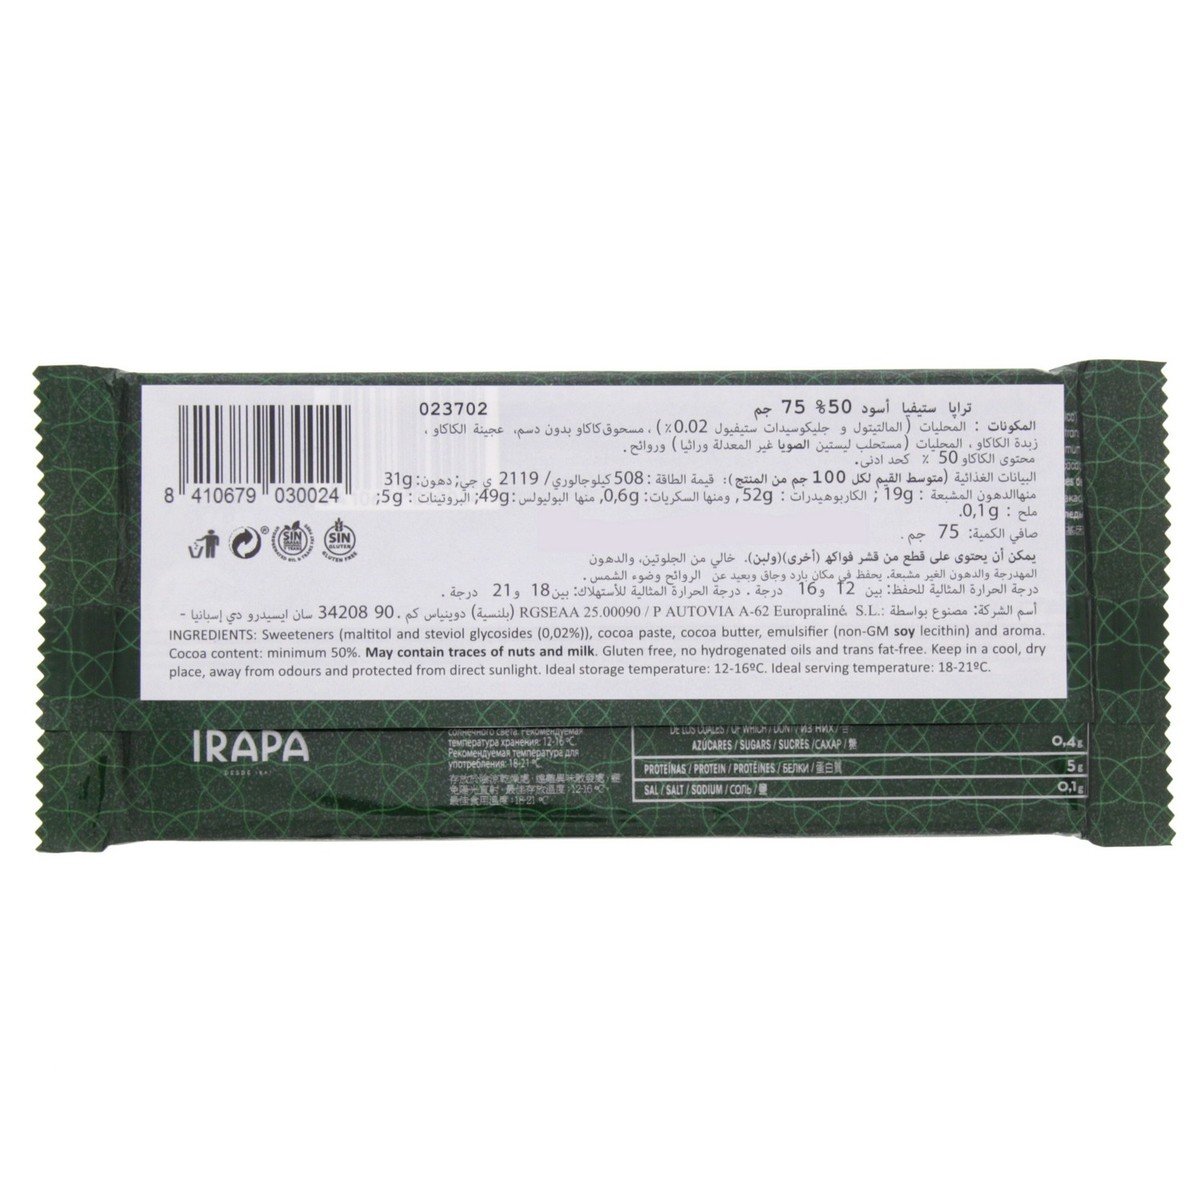 Trapa Noir 50% Stevia Chocolate Bar 75 Gm